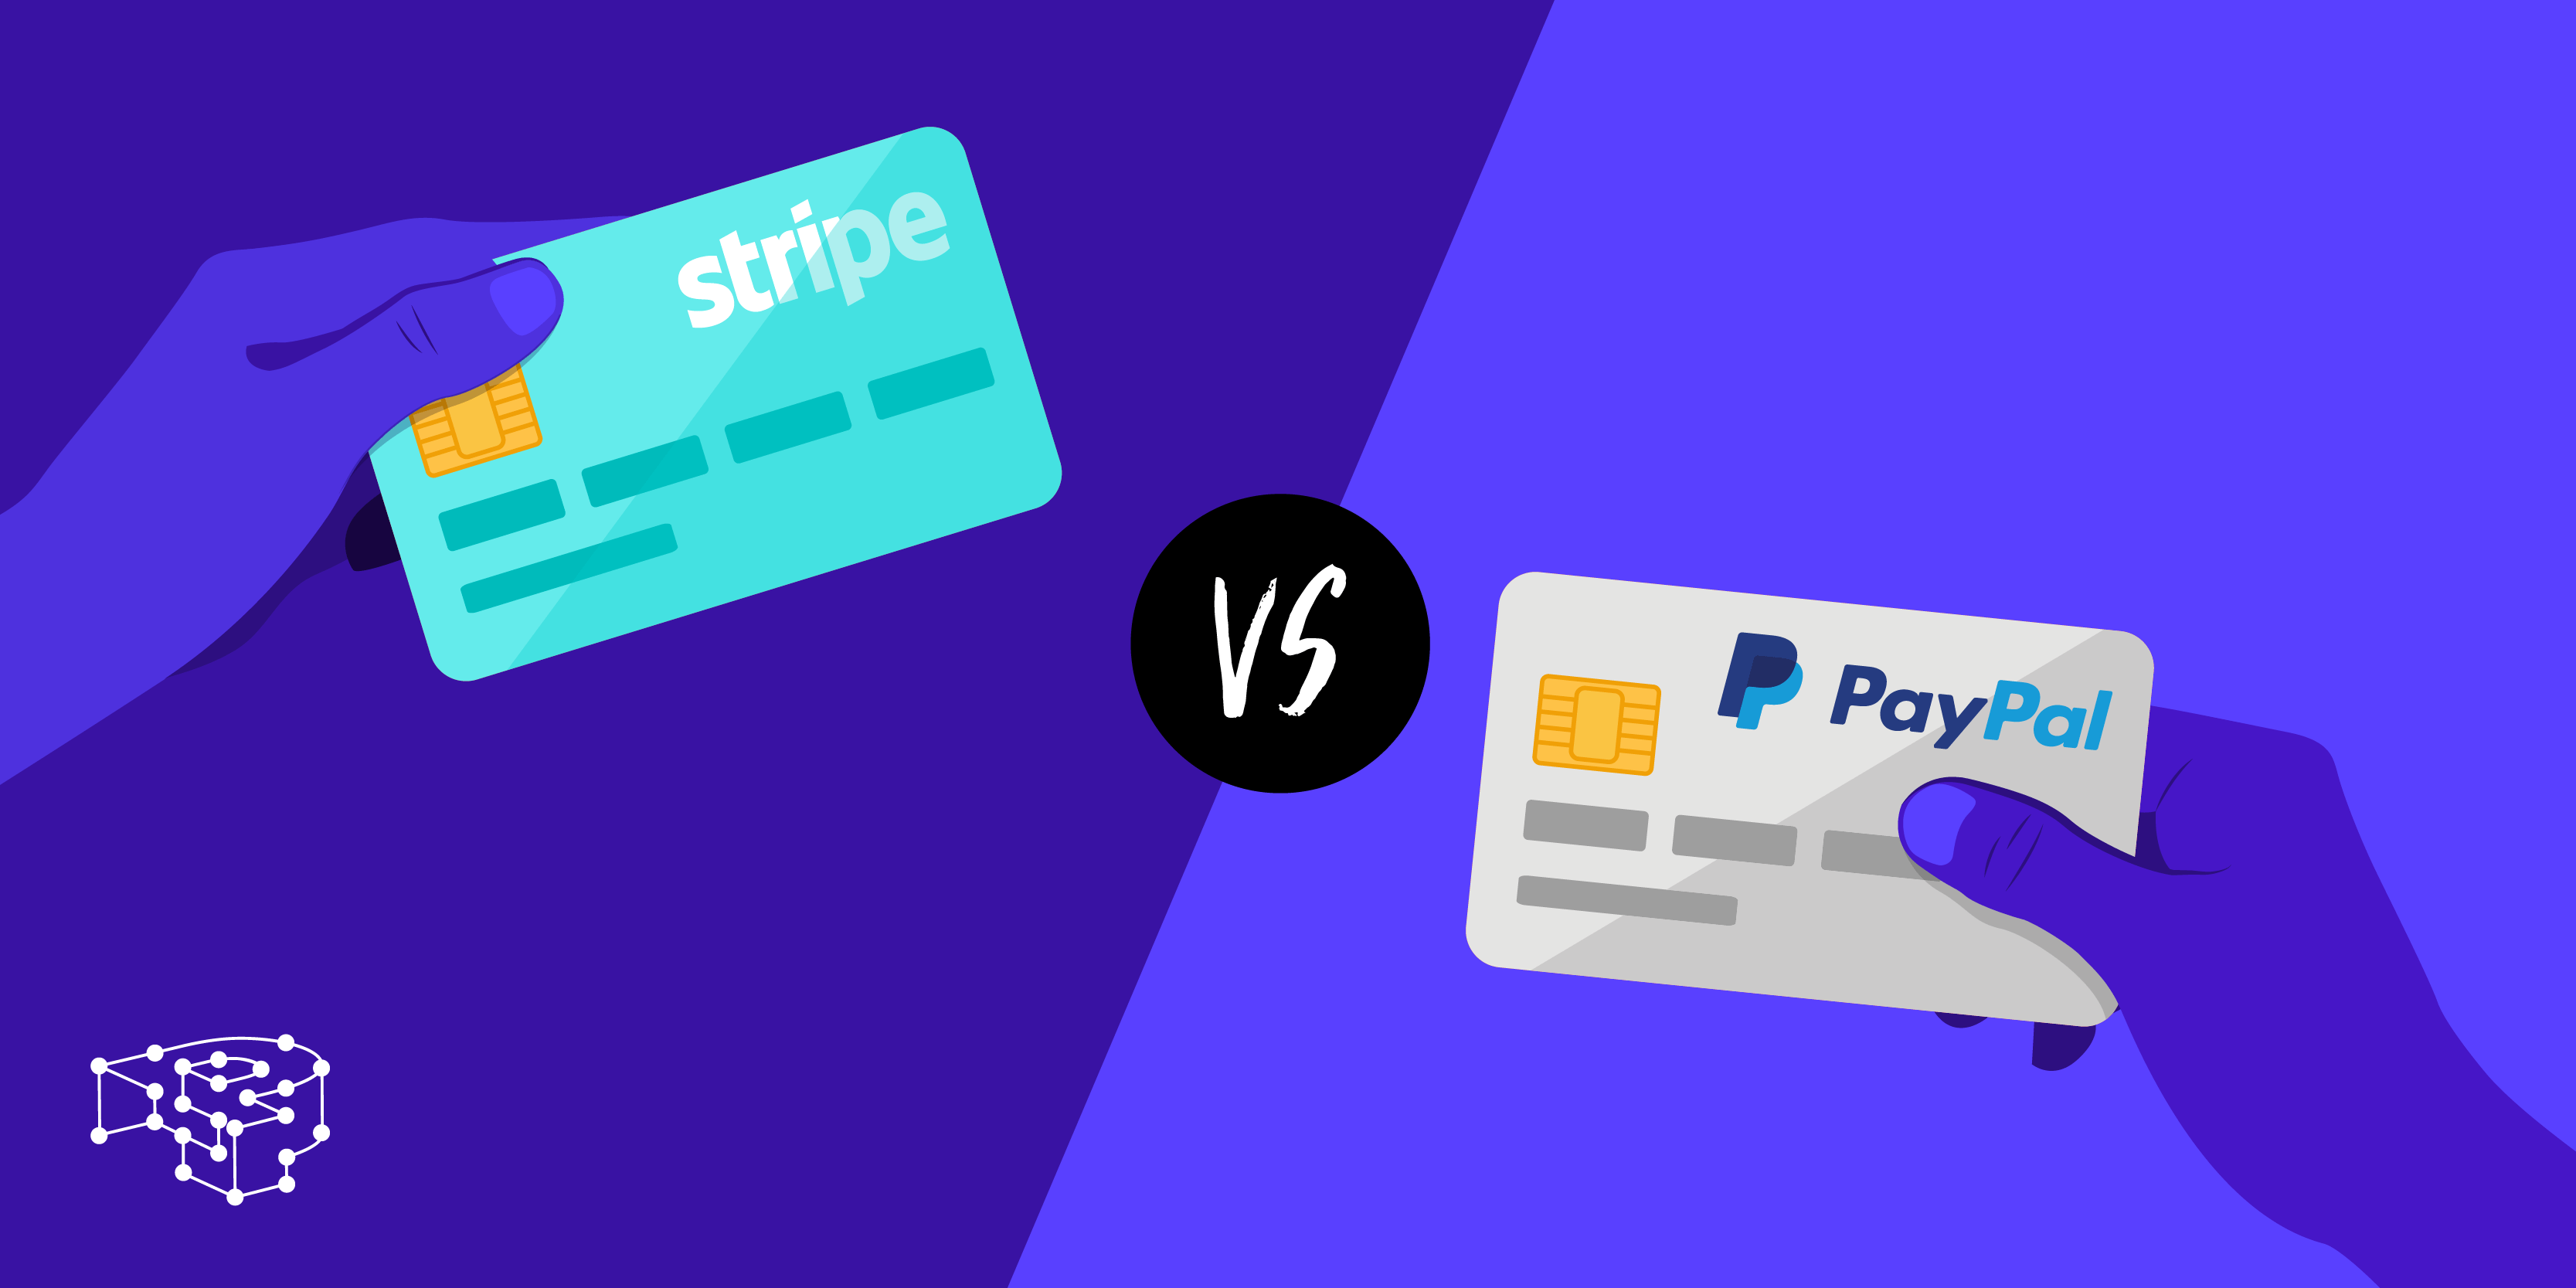 Stripe vs PayPal